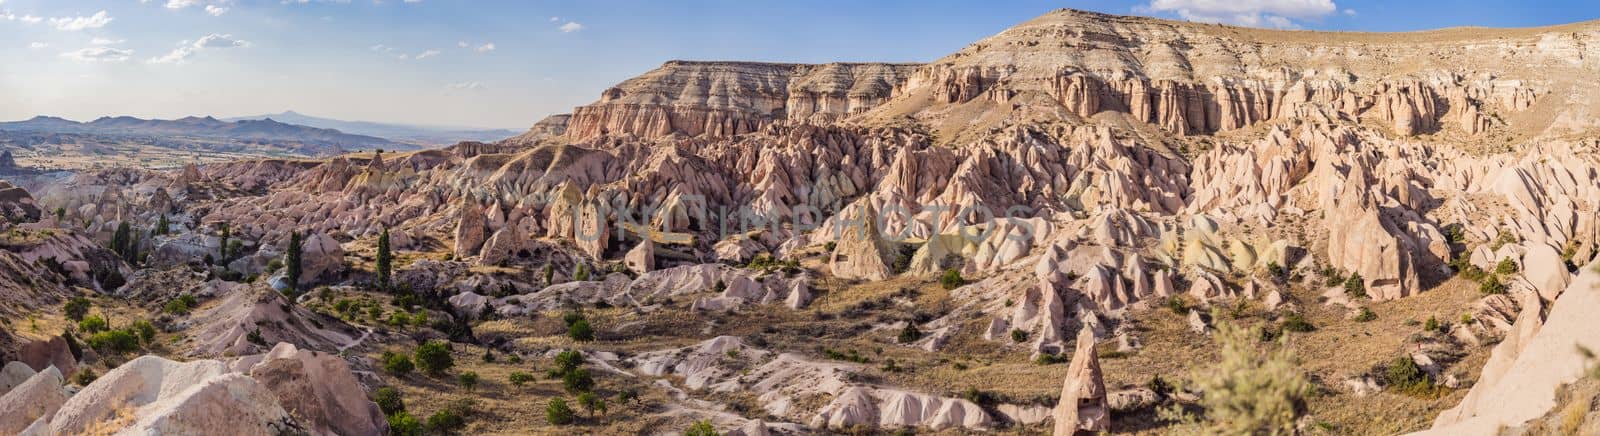 Meskendir Valley, Pink Valley. Cappadocia Turkey. Travel to Turkey concept by galitskaya